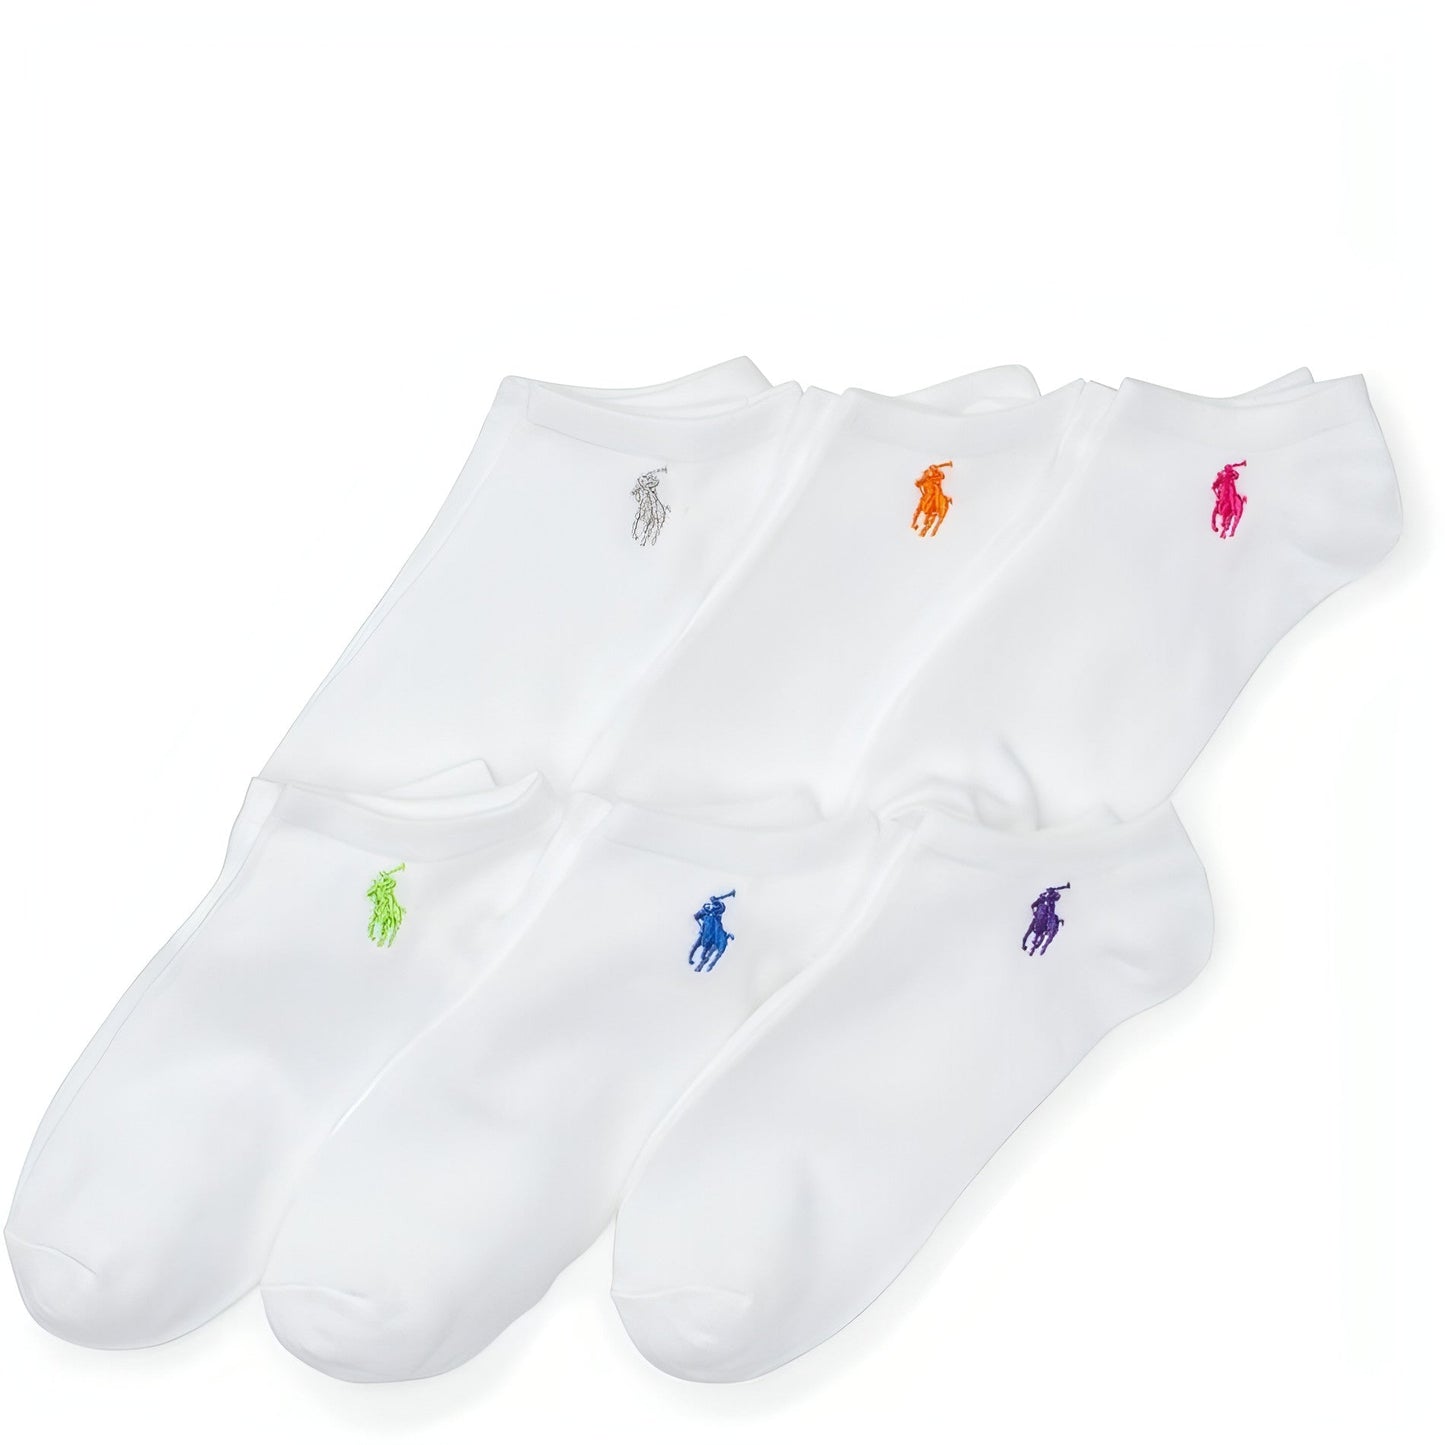 POLO RALPH LAUREN moteriškos baltos kojinės Flat low cut 6-pack socks